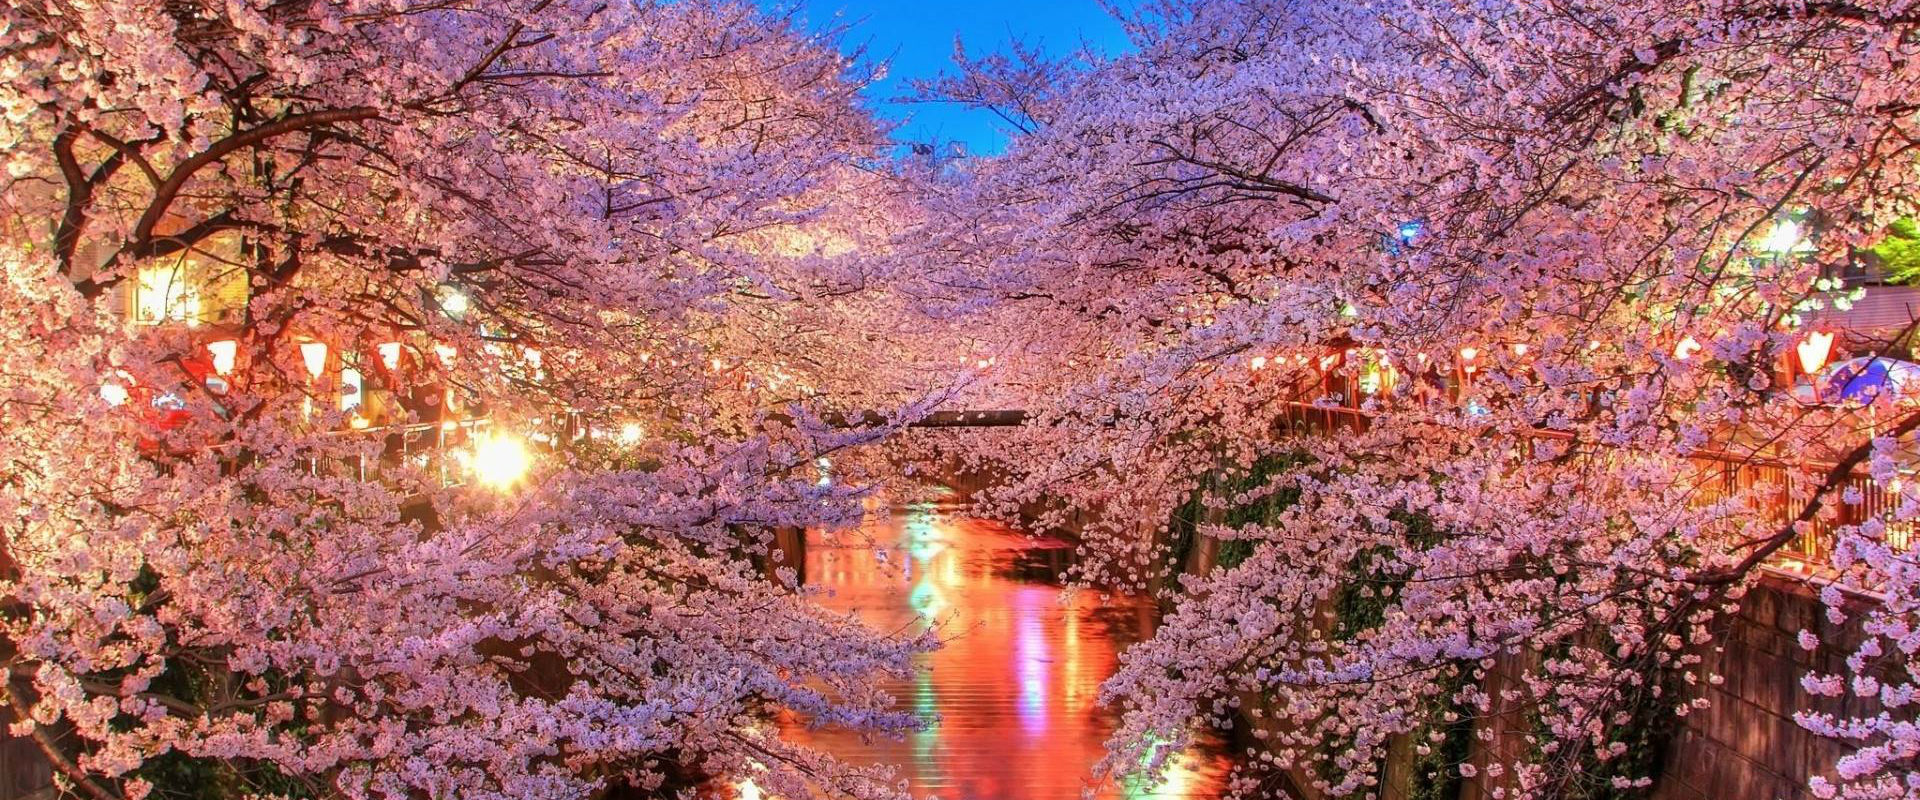 Nakameguro Cherry Blossom Viewing